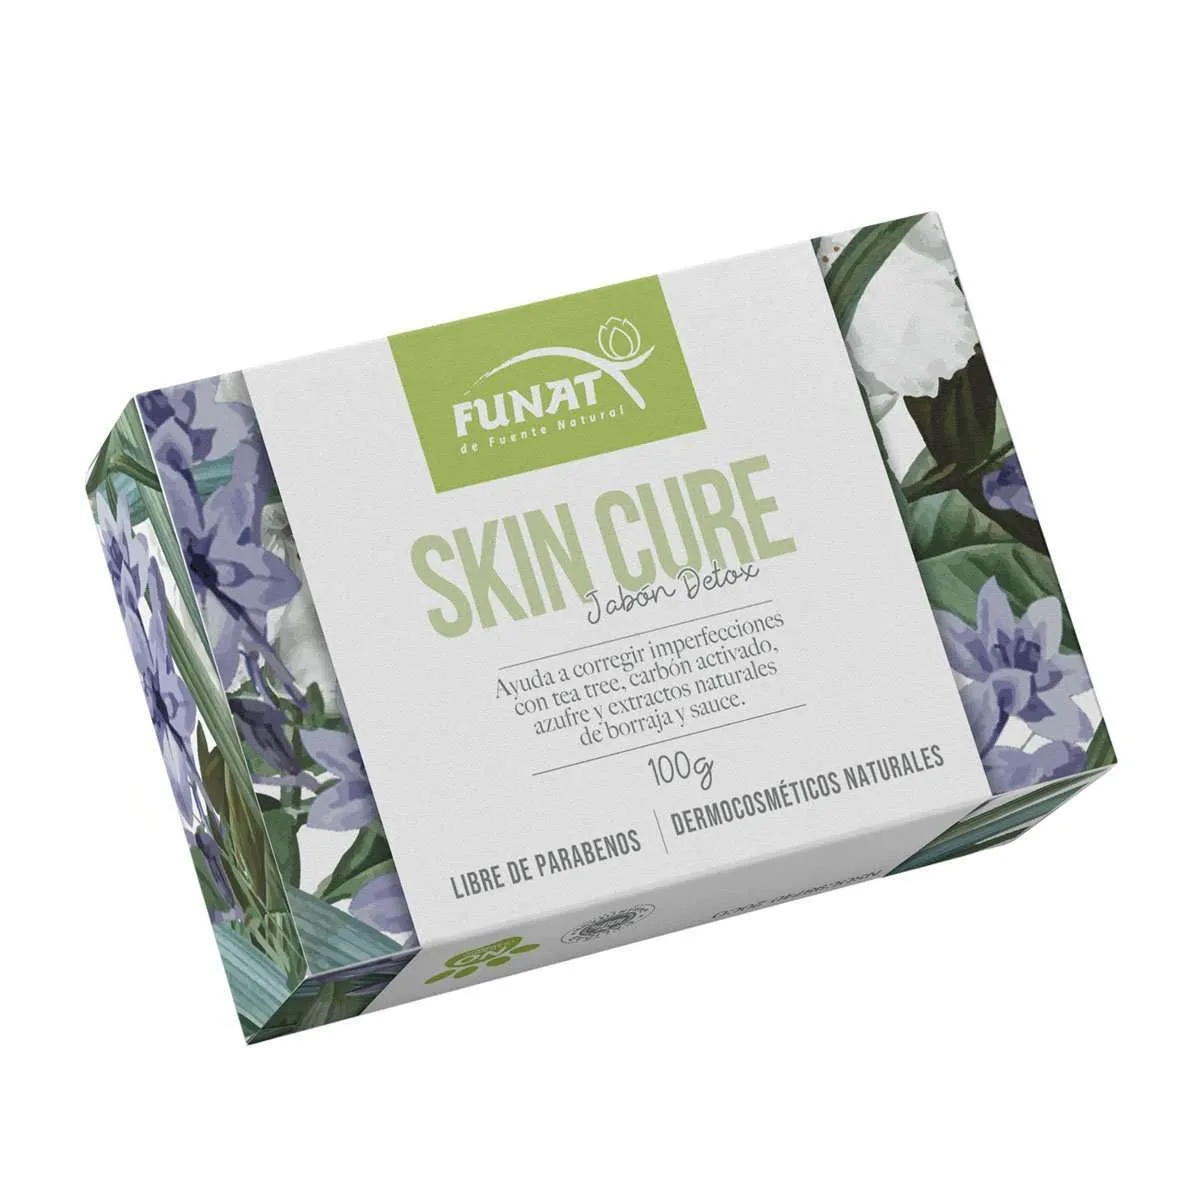 Skin cure: jabón Detox 100 g - Frente del empaque - Funat